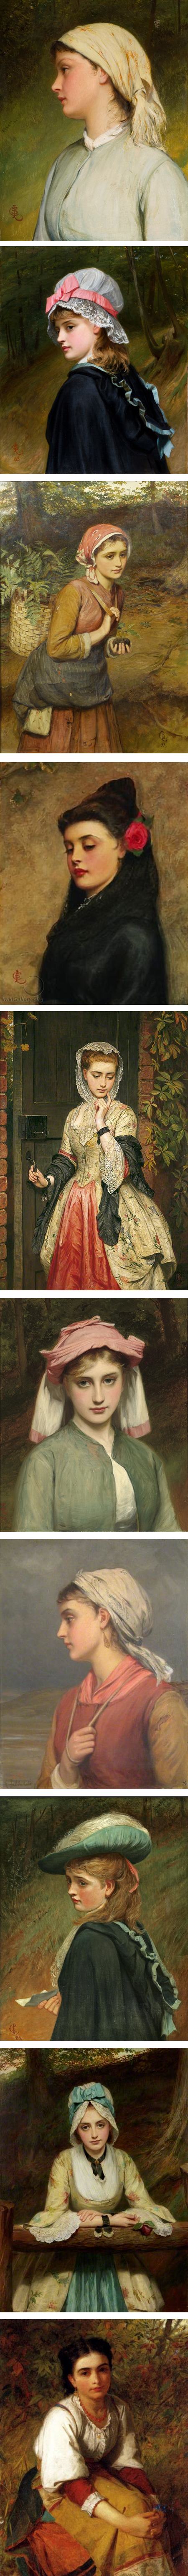 Charles Sillem Lidderdale, 19th century portraits